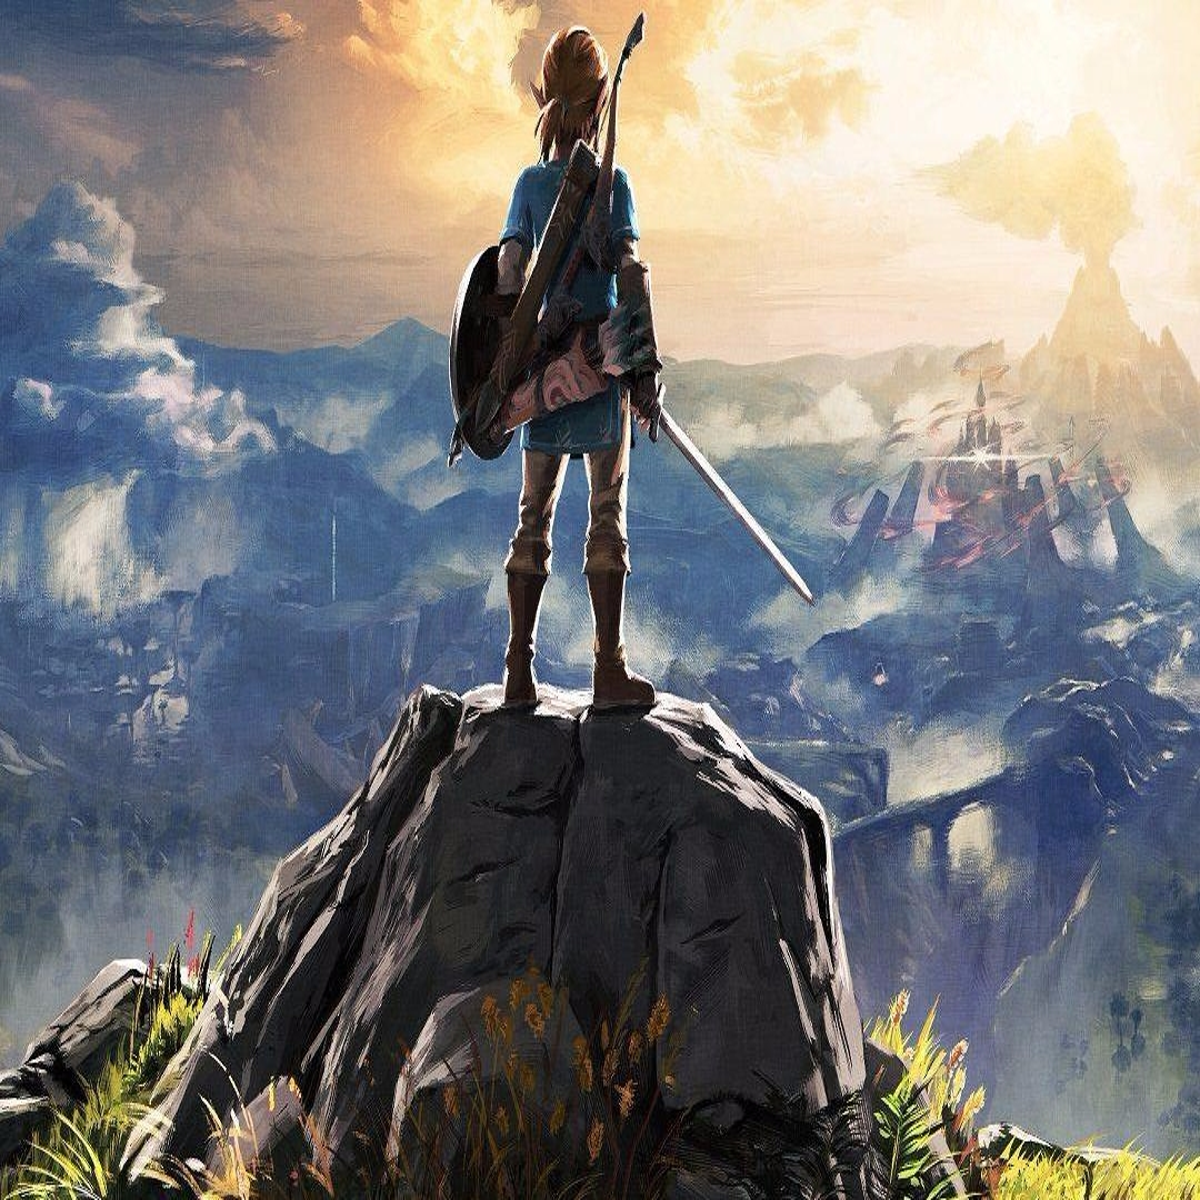 Análise de The Legend of Zelda: Breath of the Wild